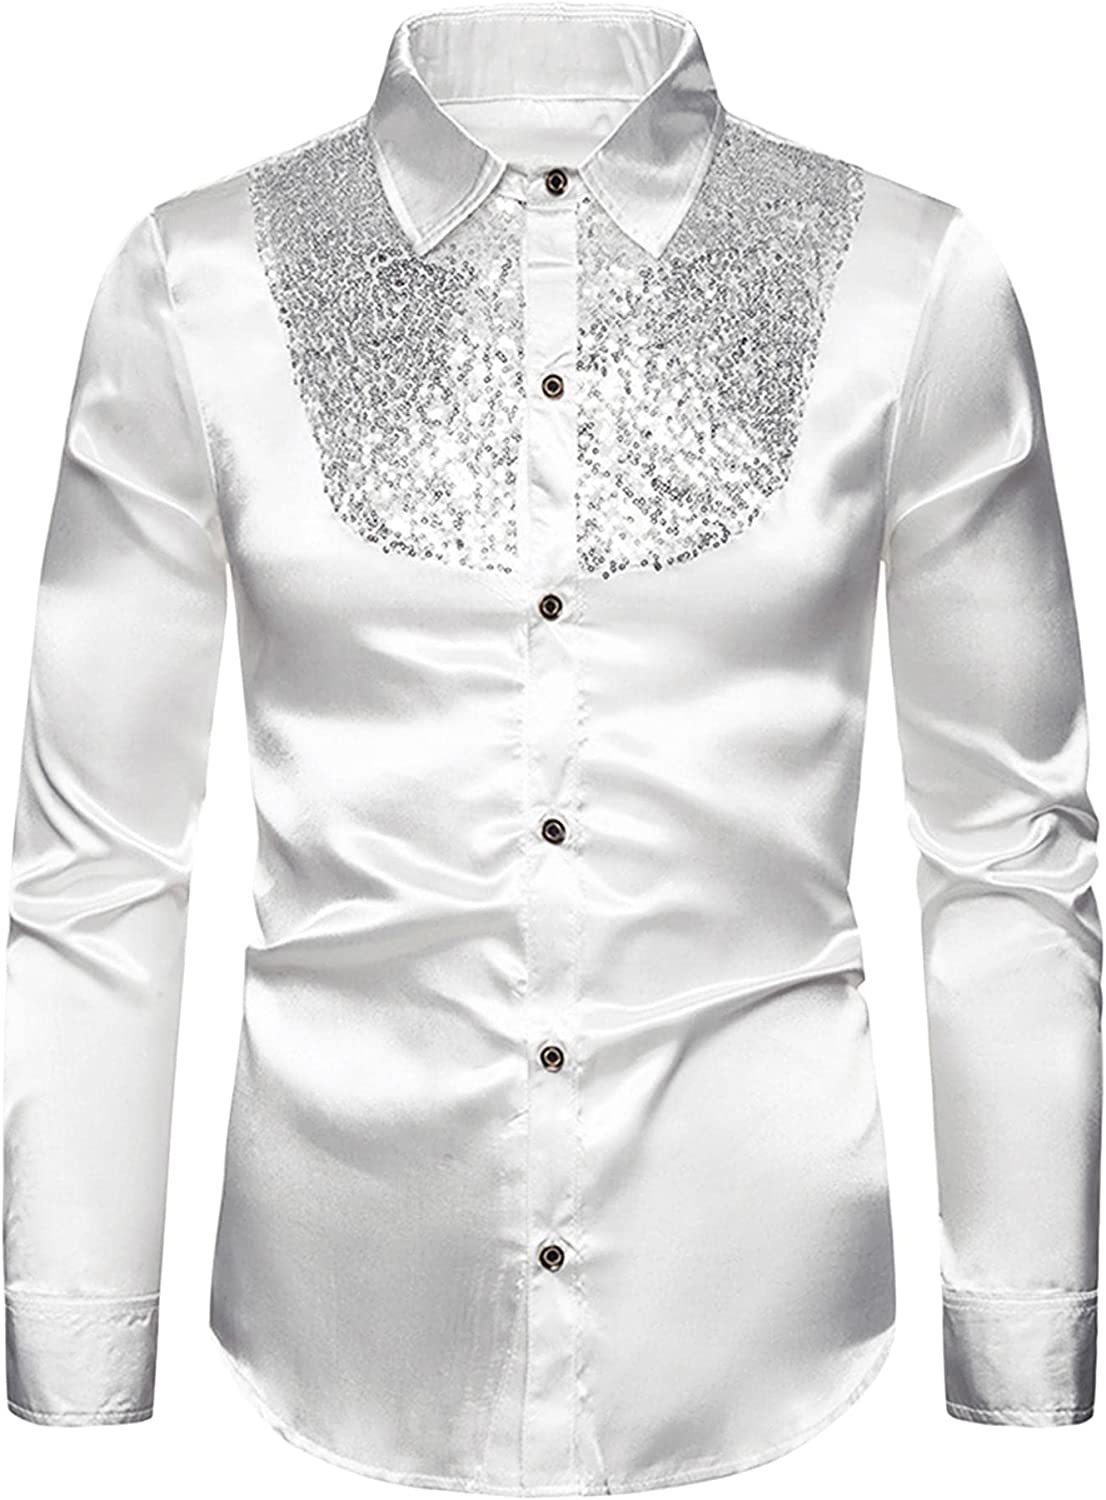 Men's Sequin White Satin Button Down Long Sleeve Dress Shirt